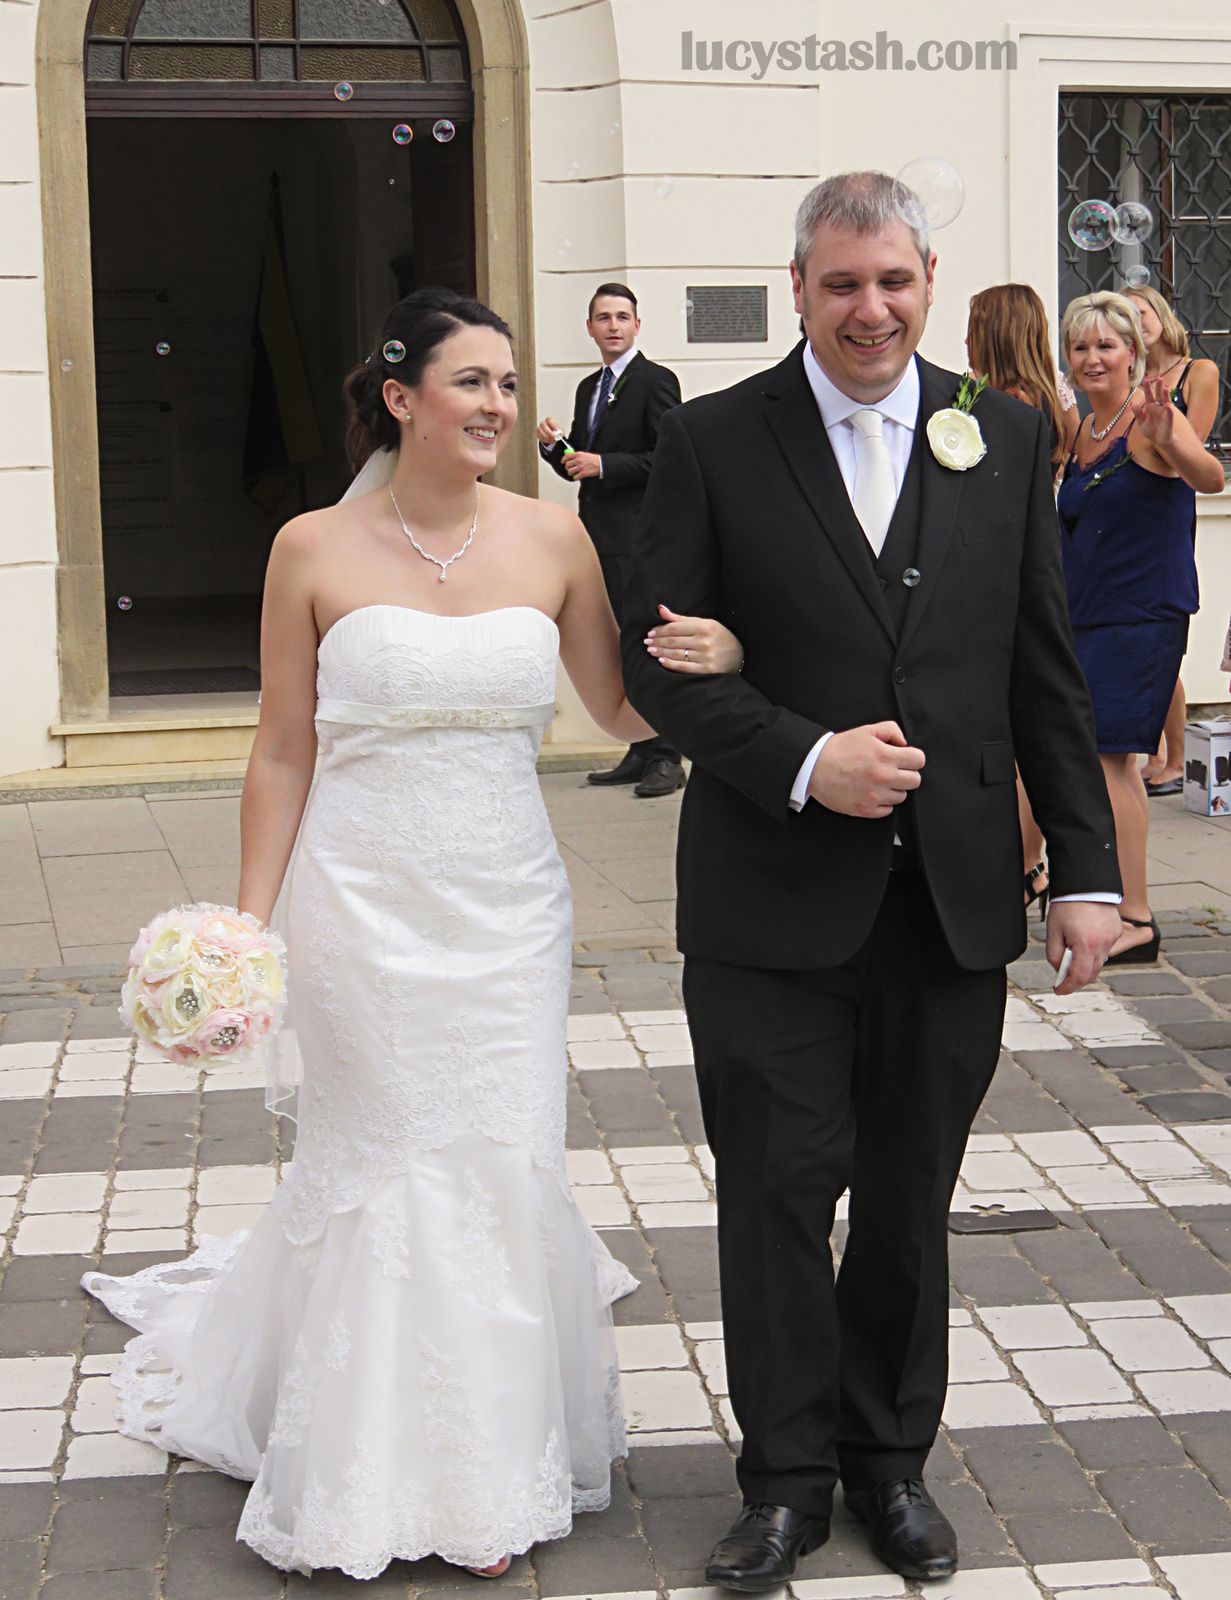 My Wedding Diary - Part 6: THE WEDDING!